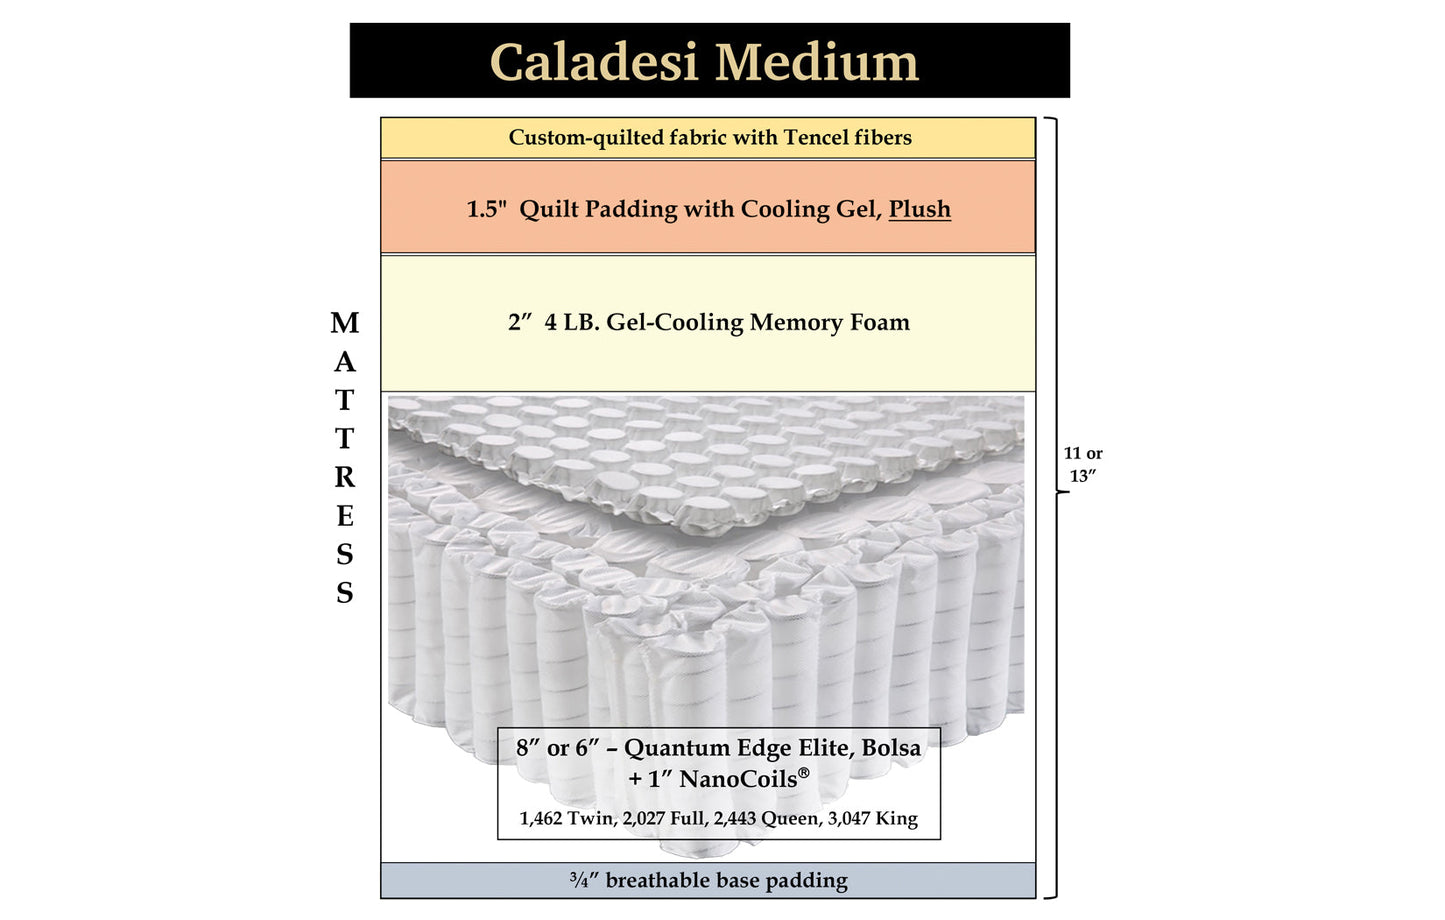 Caladesi Medium Gel - 55.5" x 75" x 11" mattress